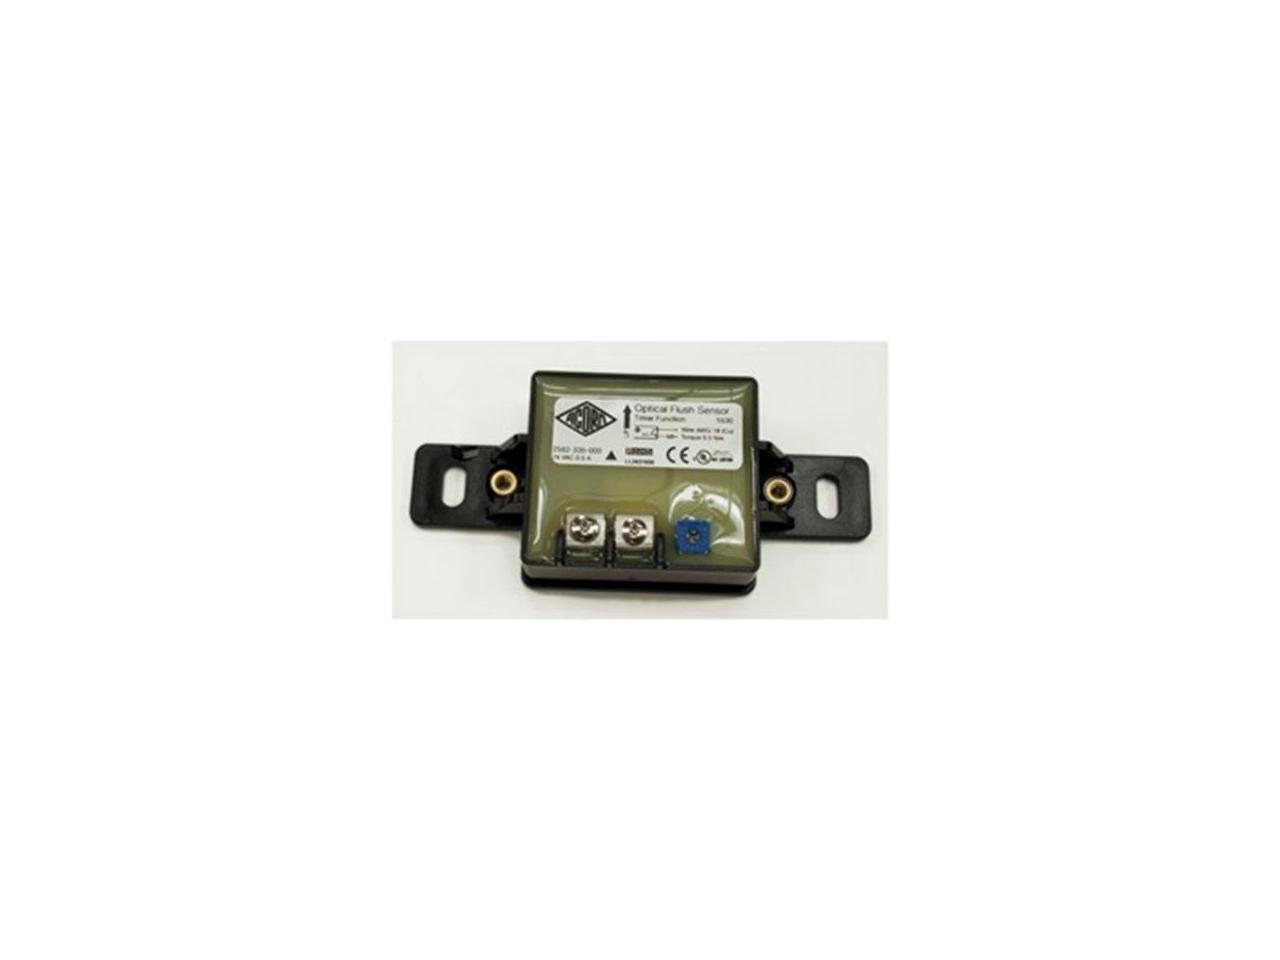 2562-335-000 ACORN Electronic Eye Sensor,24V,Washfountains